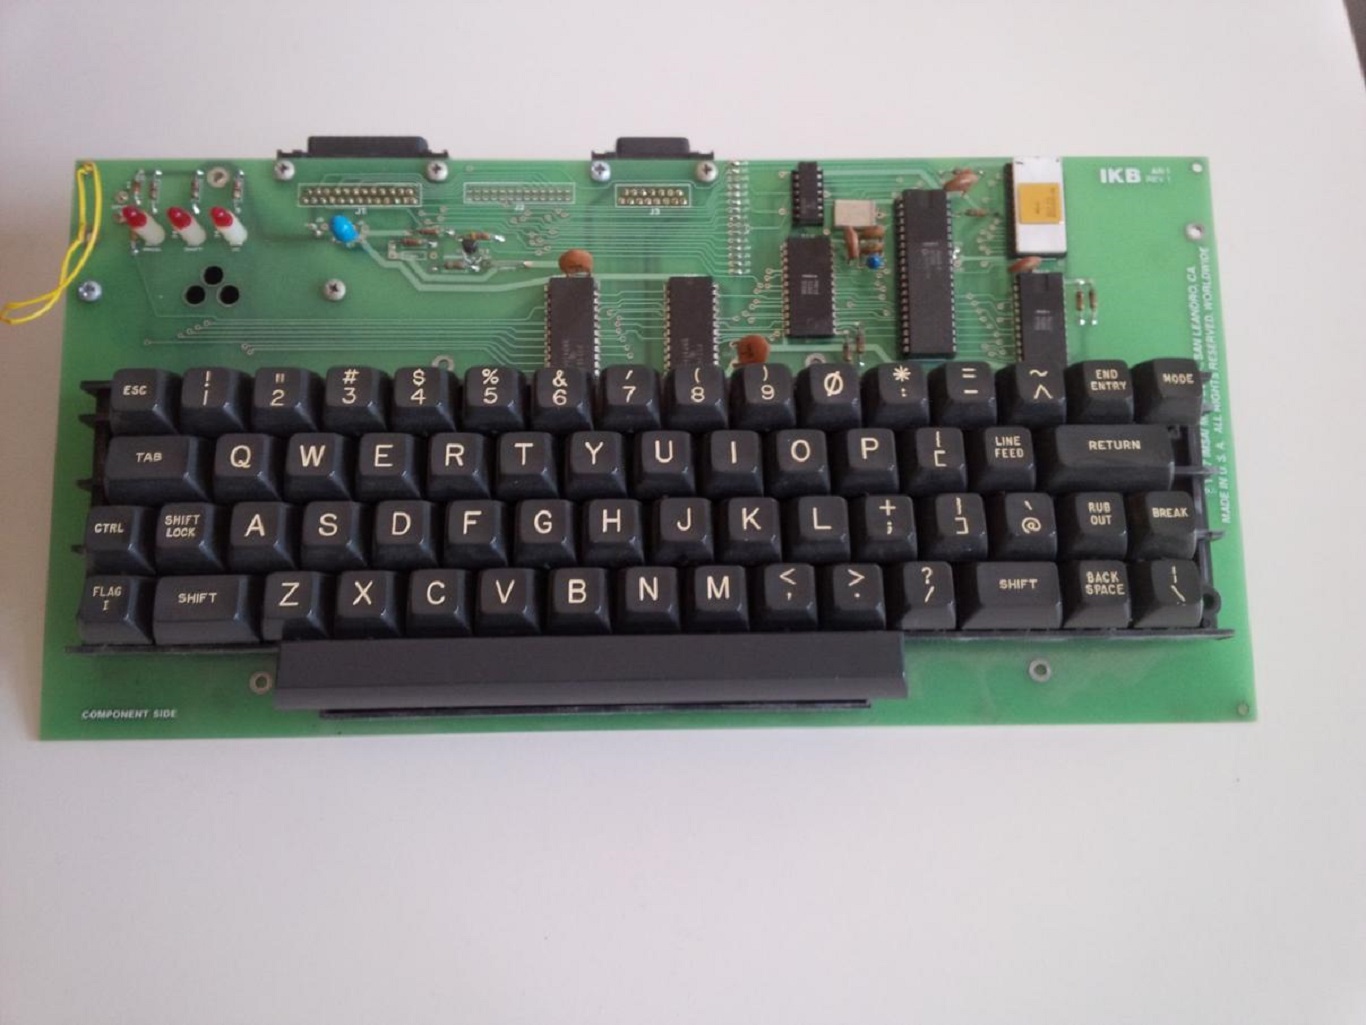 IKB-1 Internal keyboard board